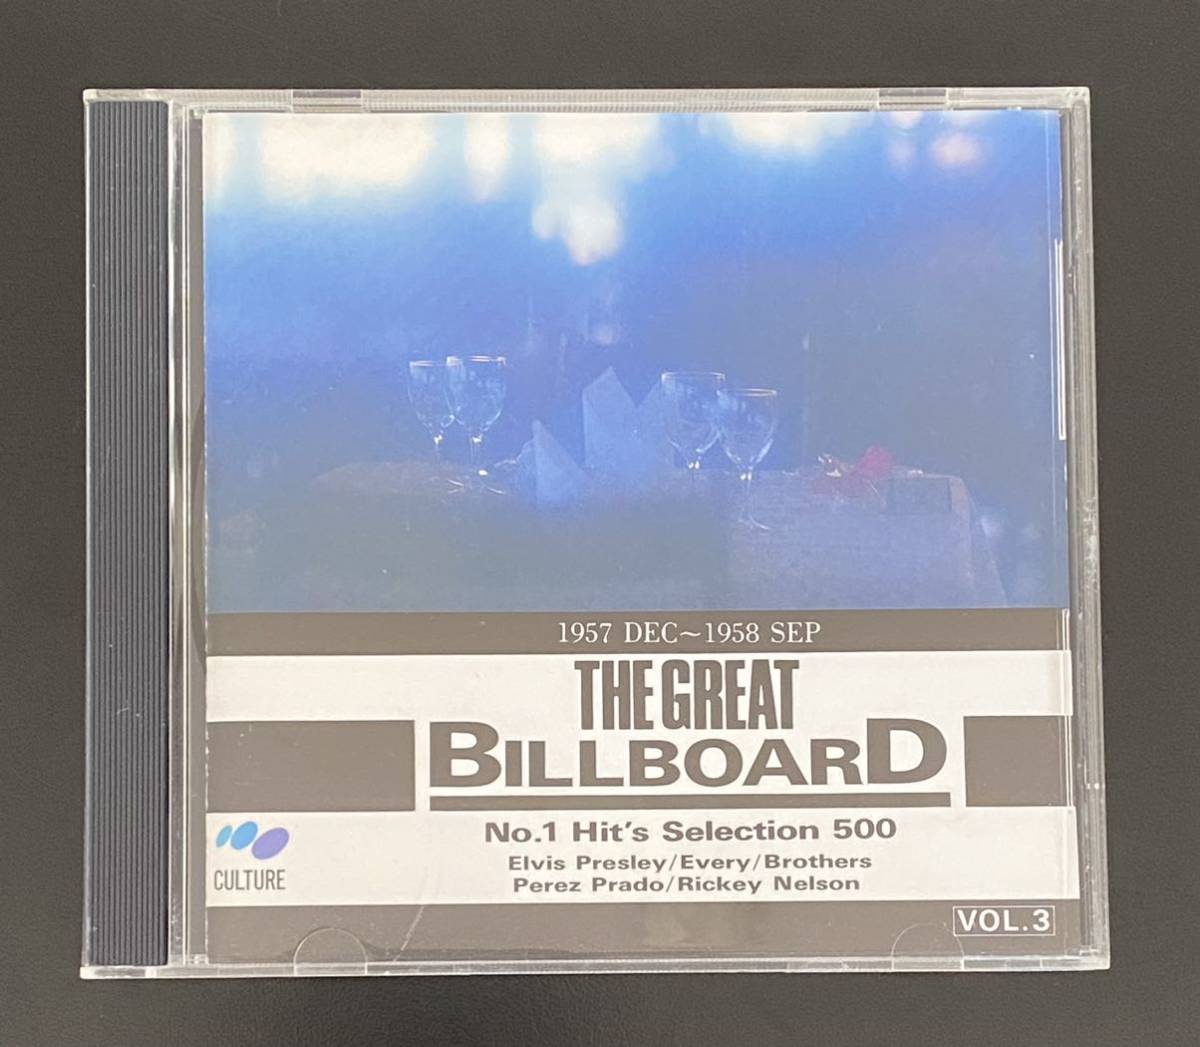 The Great Billboad No.1 Hits Selection 500 国内CD 1957 DES ~ 1958 SEP Vol.3 ビルボードナンバーワンヒッツ ロカビリー オールディーズ_画像1